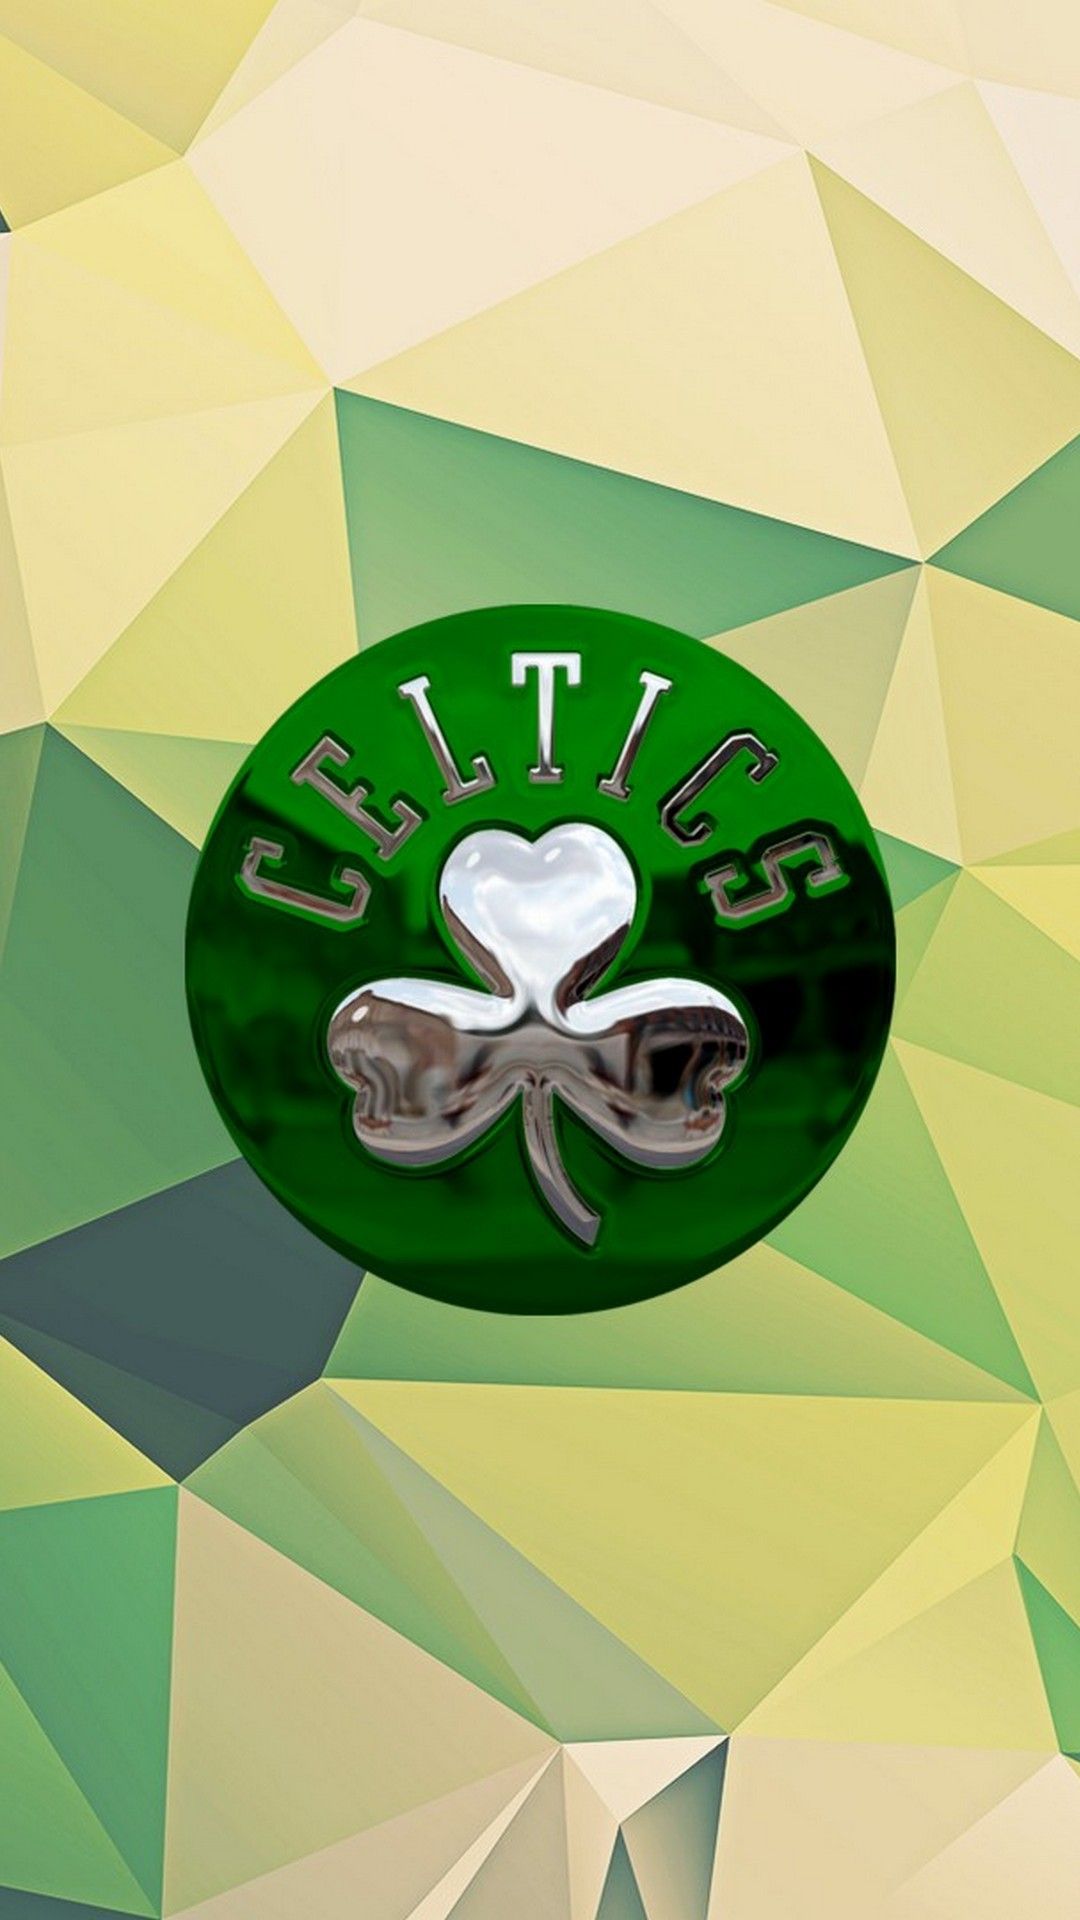 Wallpaper Android Boston Celtics Android Wallpaper